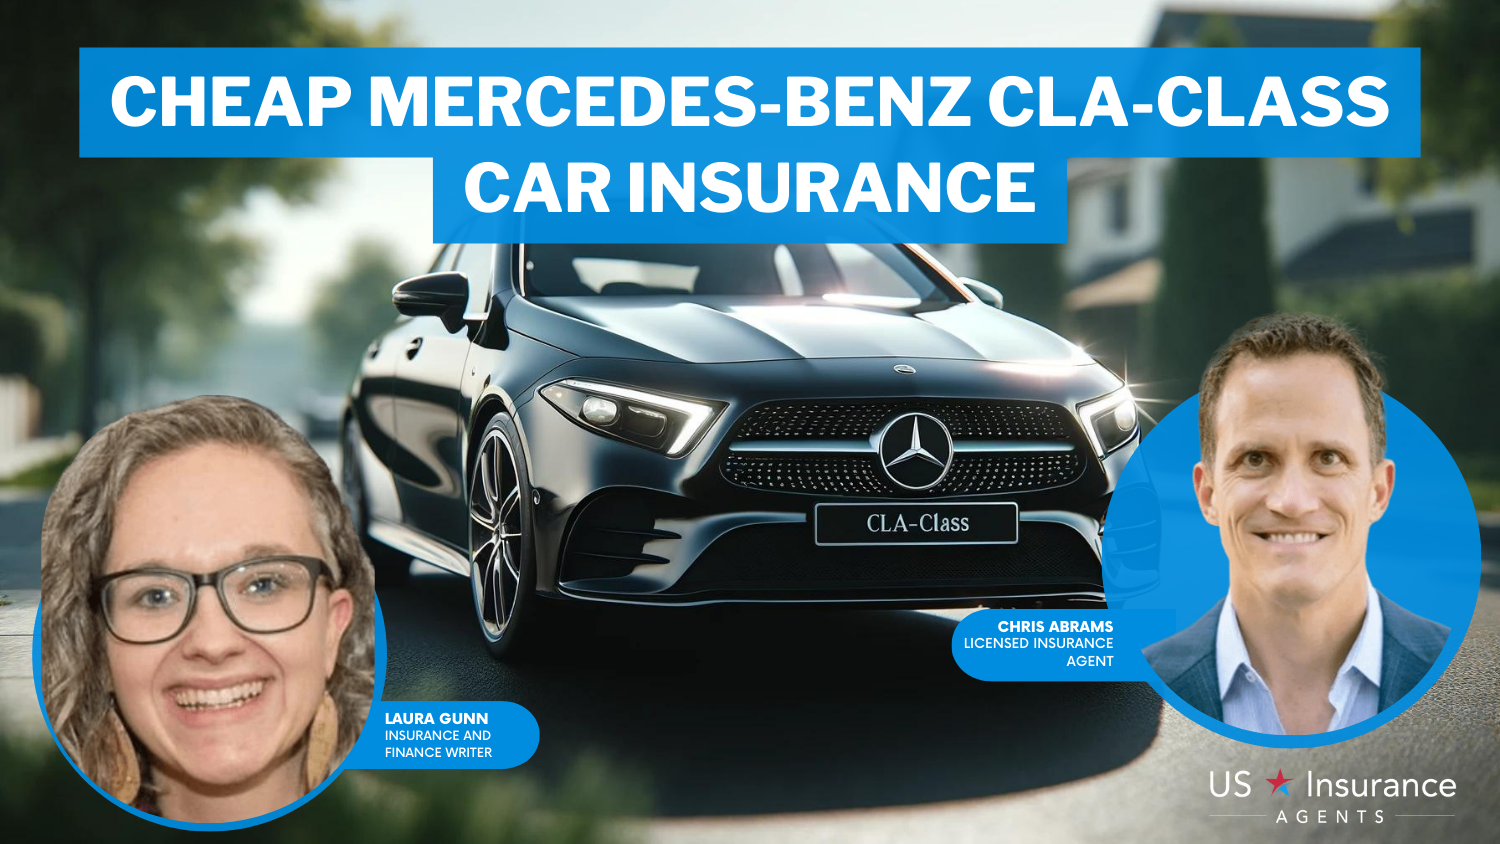 Cheap Mercedes-Benz CLA-Class Car Insurance: Erie, Safeco, and AAA